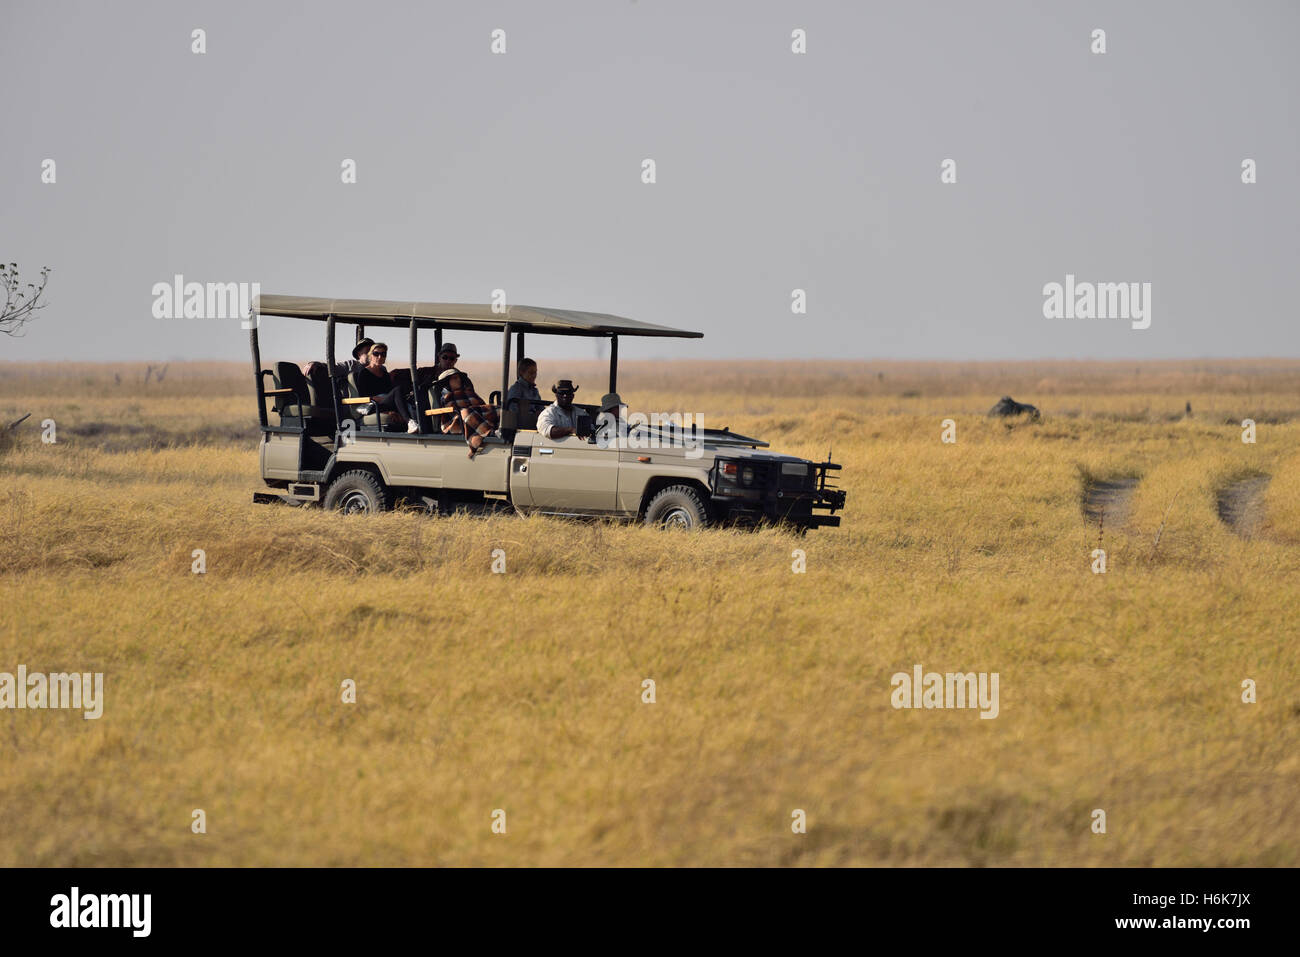 Tourists on safari in Africa Stock Photo